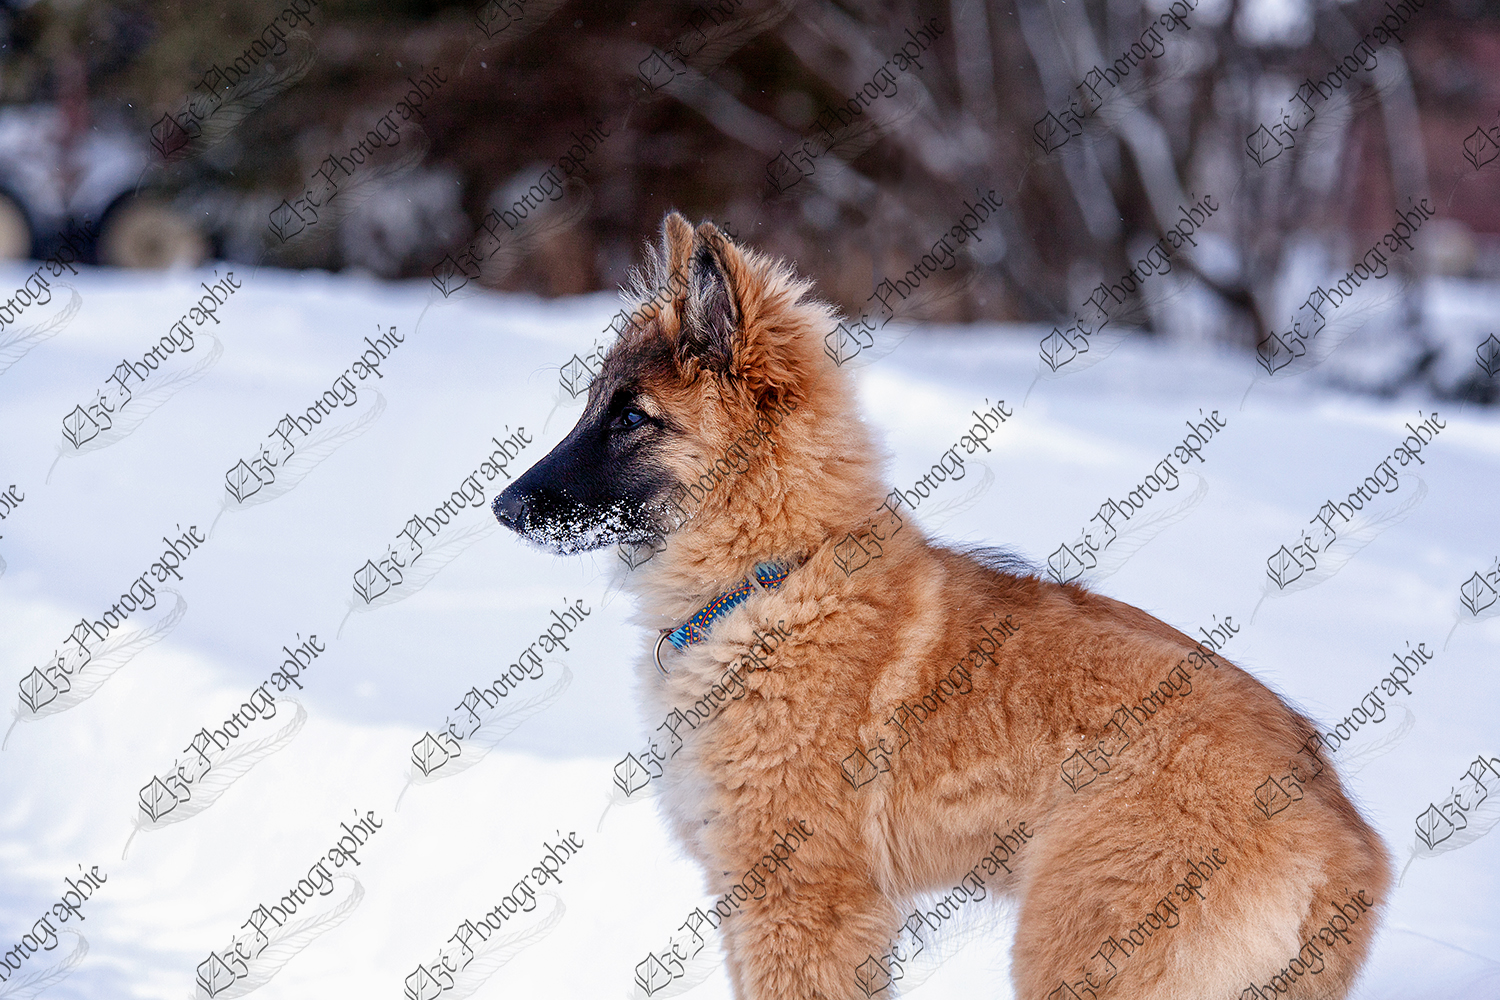 elze_photo_5906_chiot_berger_neige_dog_winter